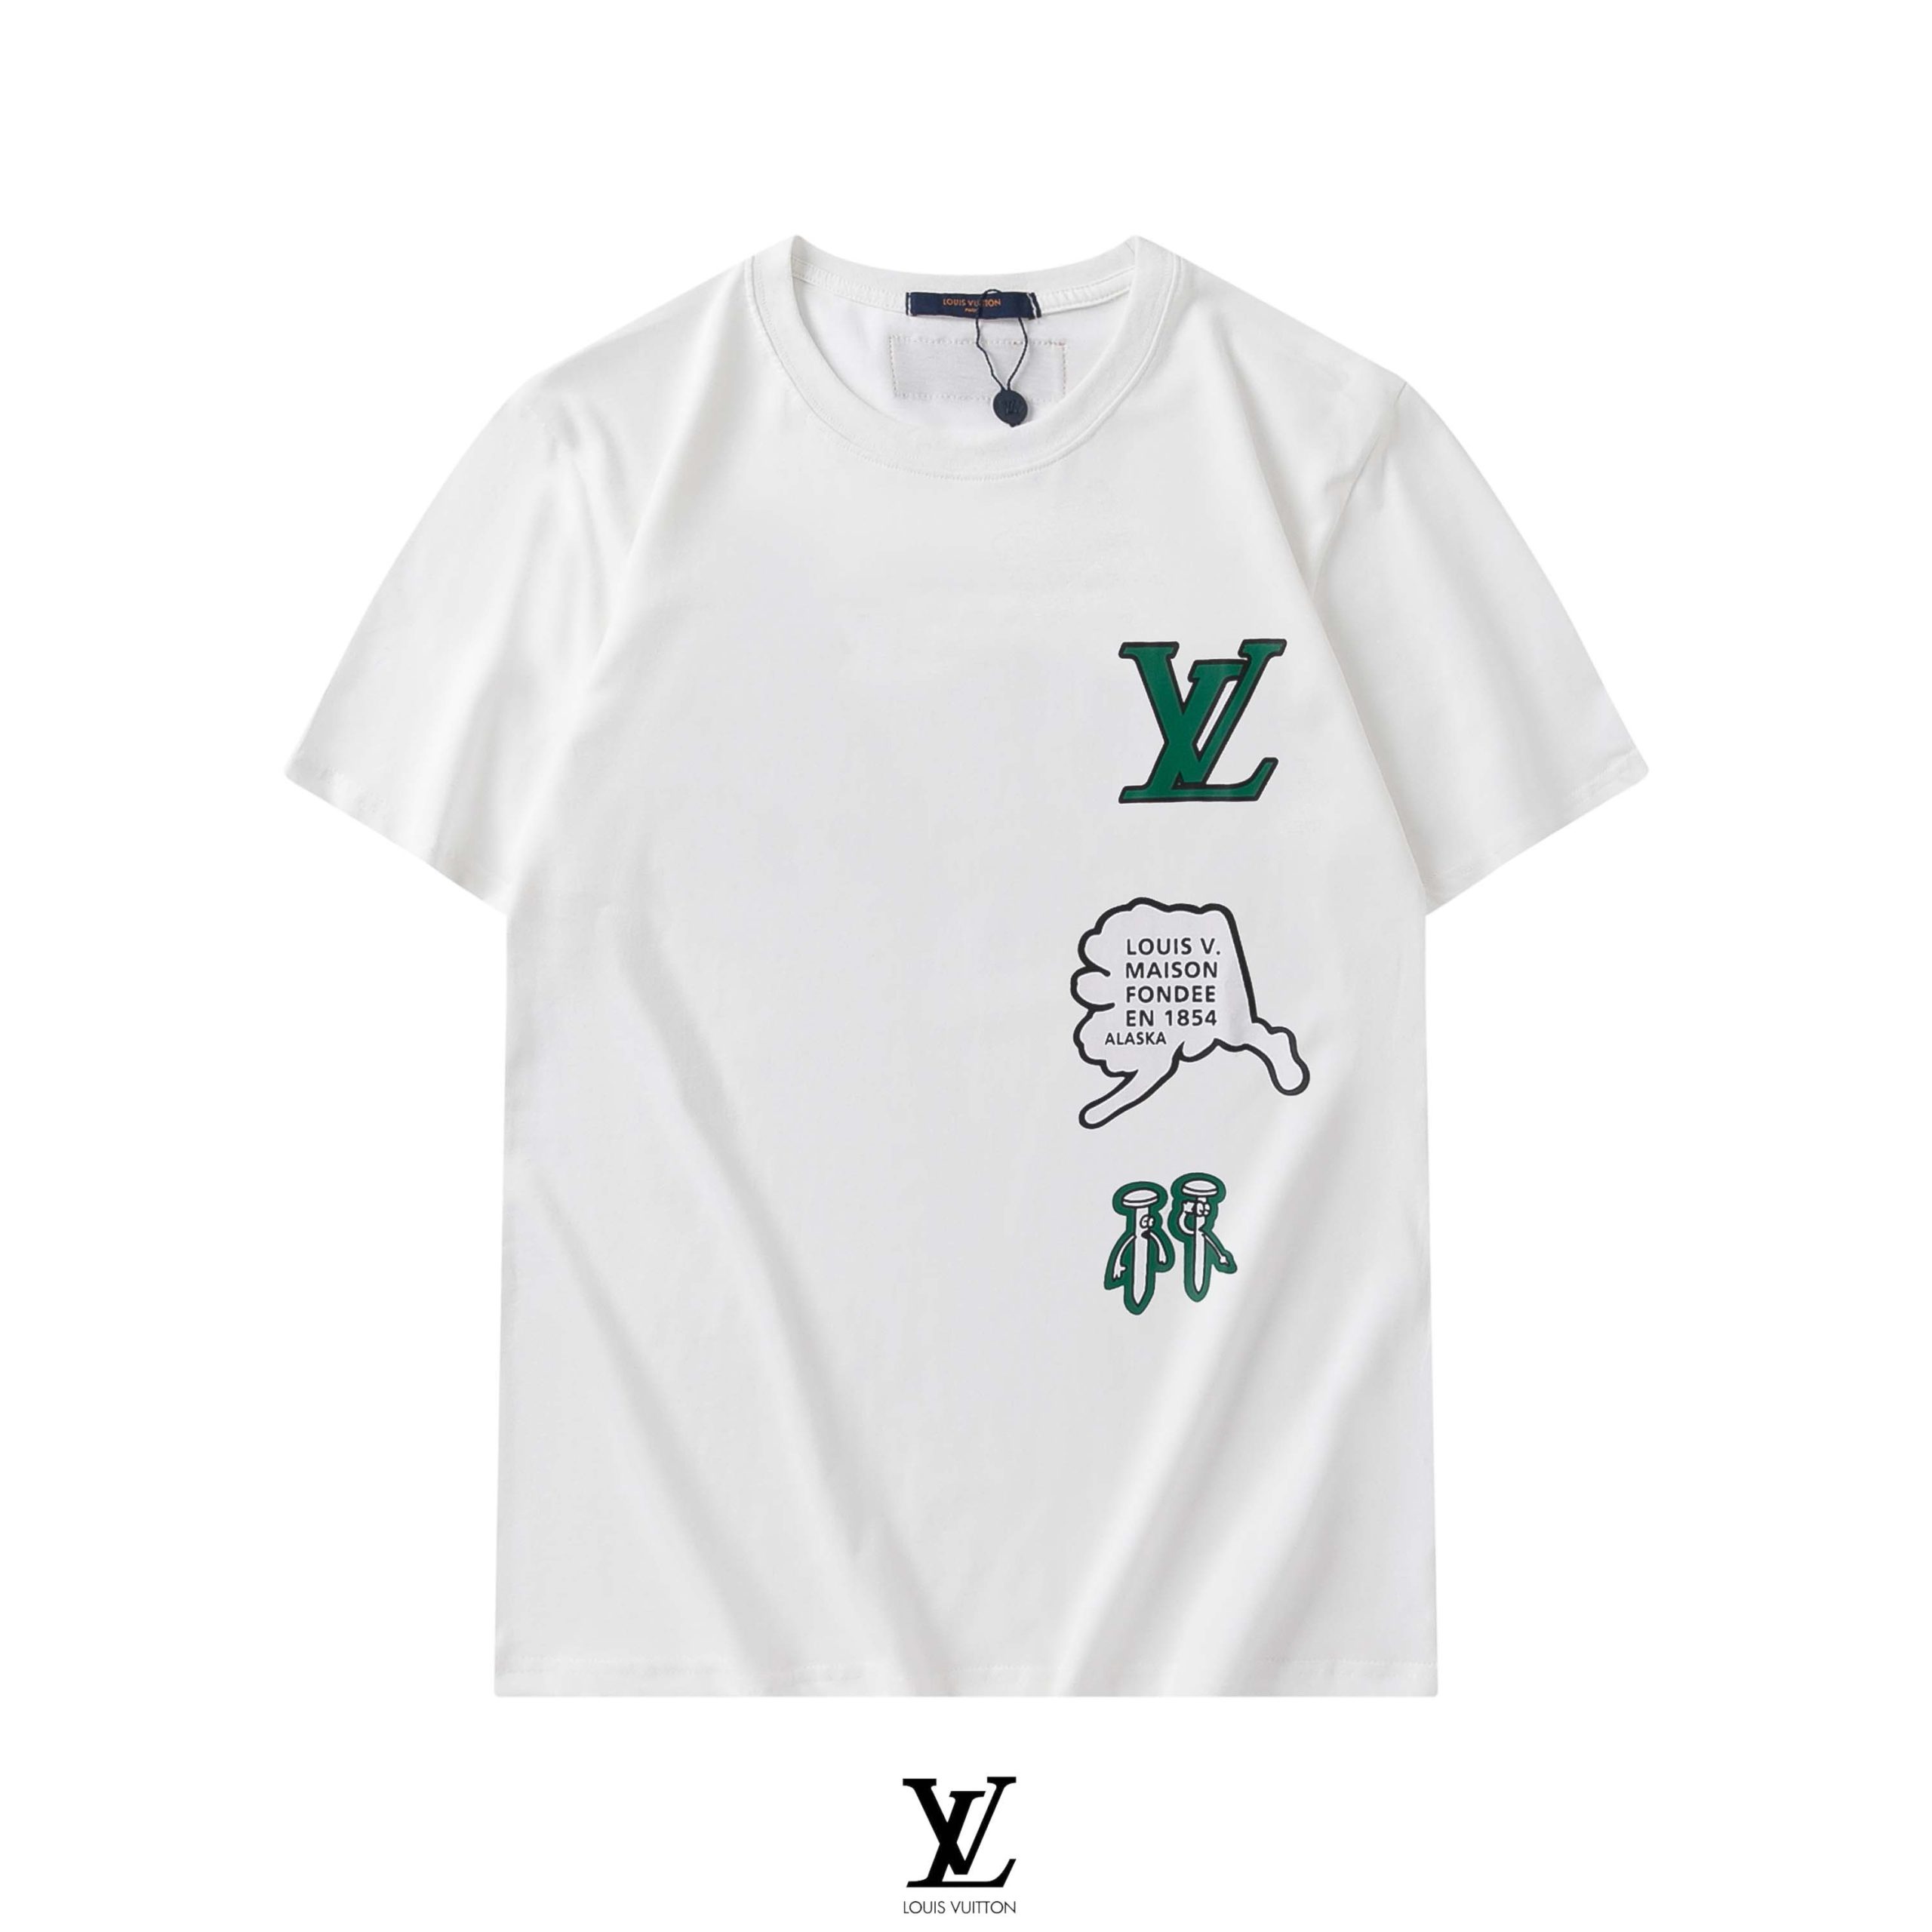 Camiseta Louis Vuitton - Colstore: Cali, Bogotá, Medellín